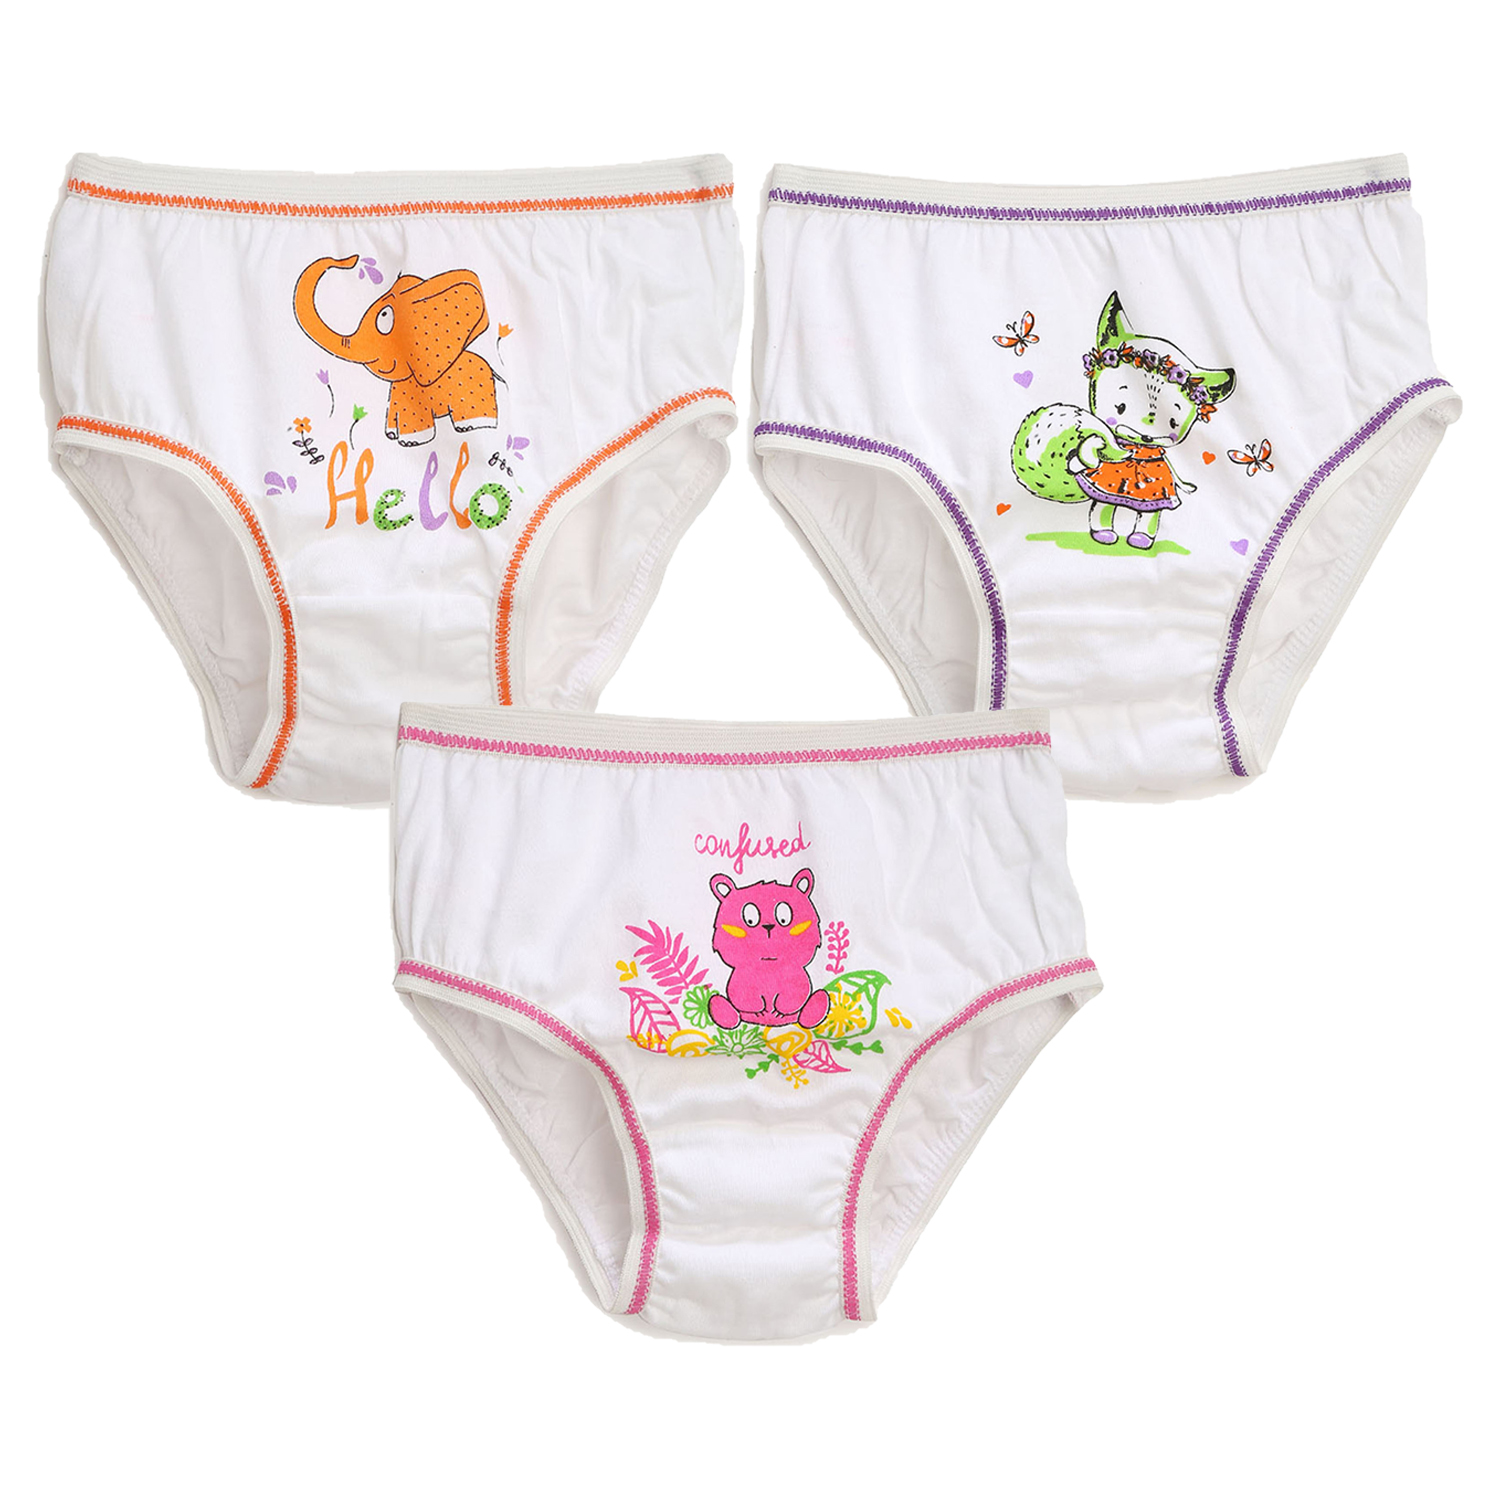 Buy Care In Kids Panties (Pack of 3) Online @ ₹239 from ShopClues